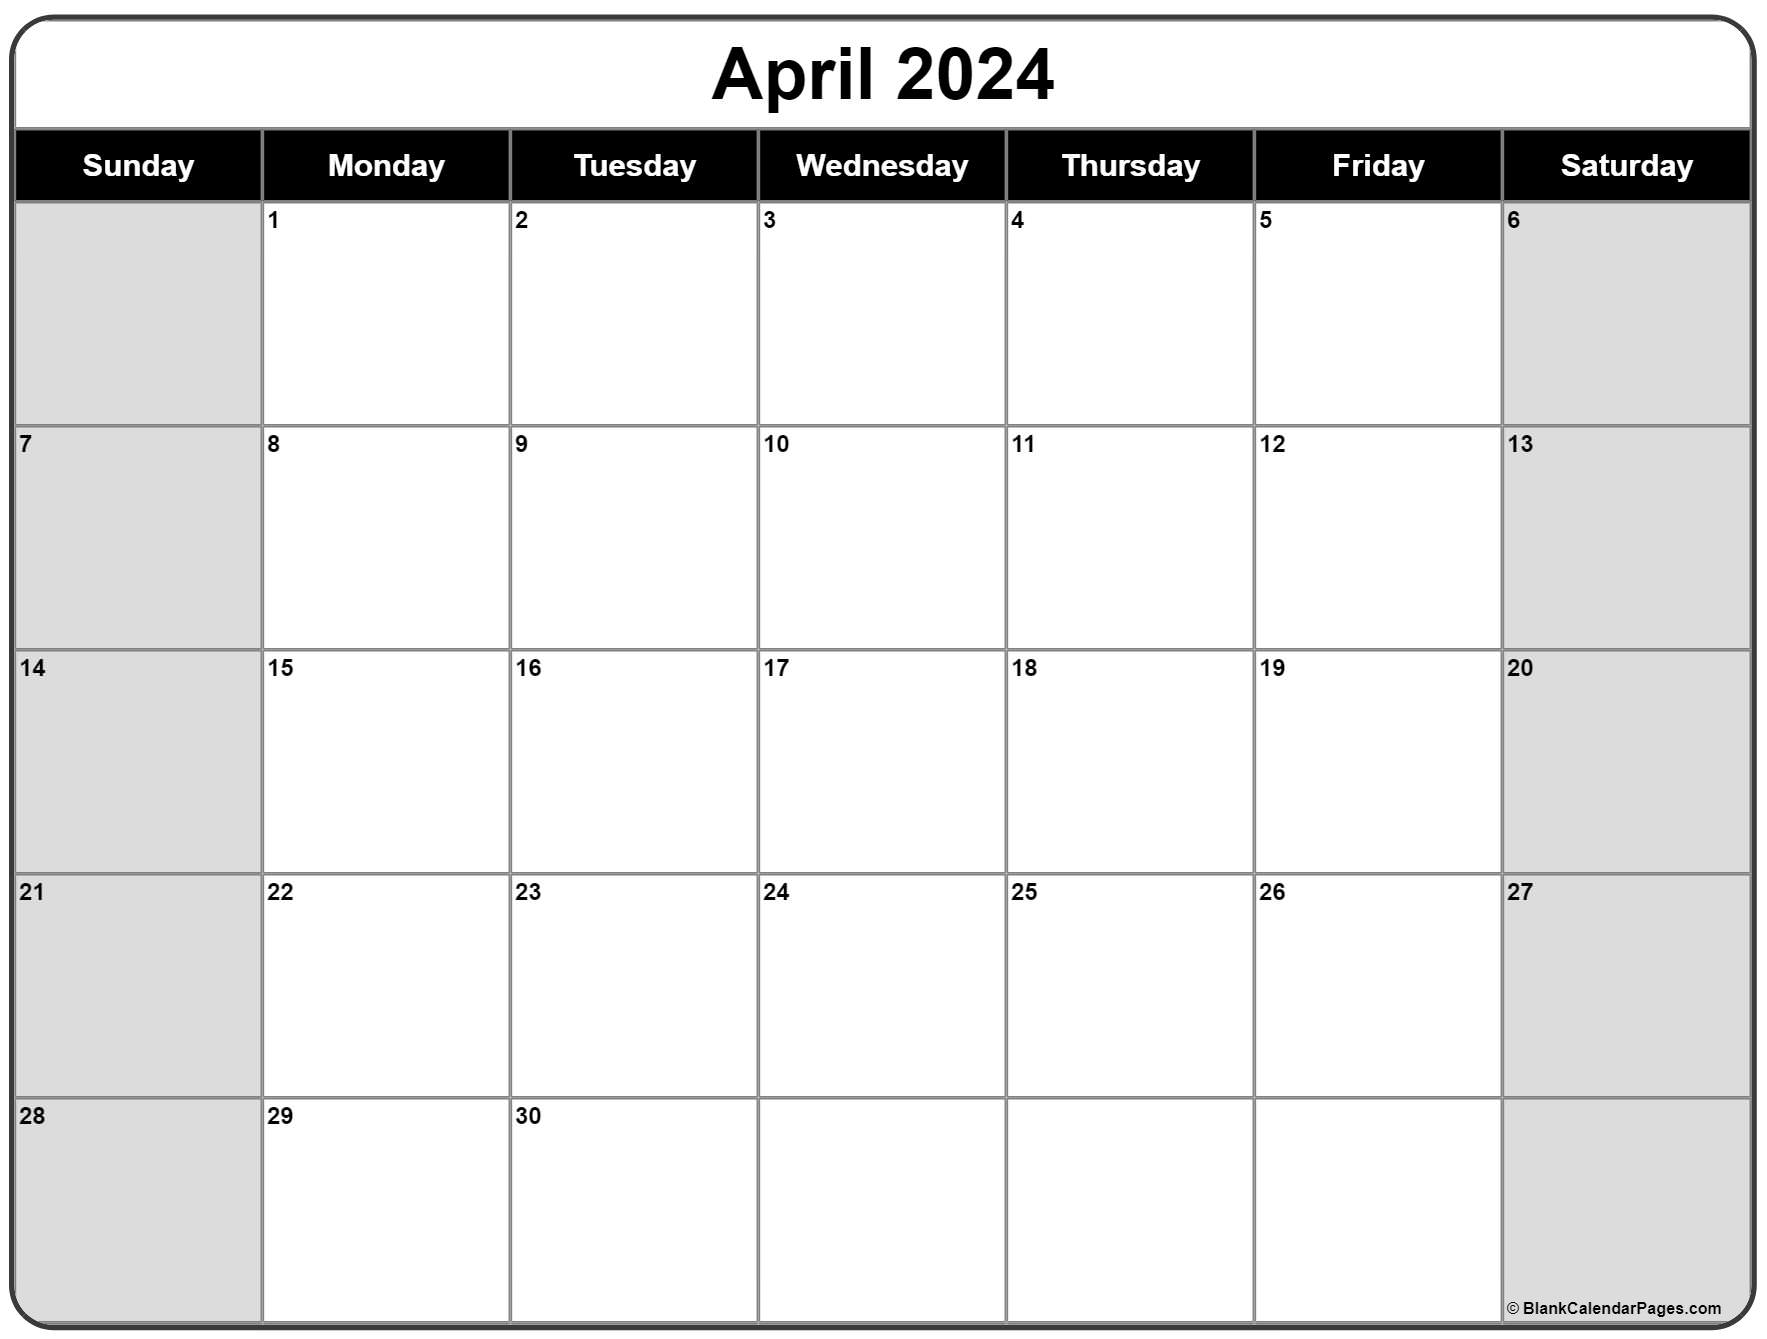 April 2024 calendar free printable calendar